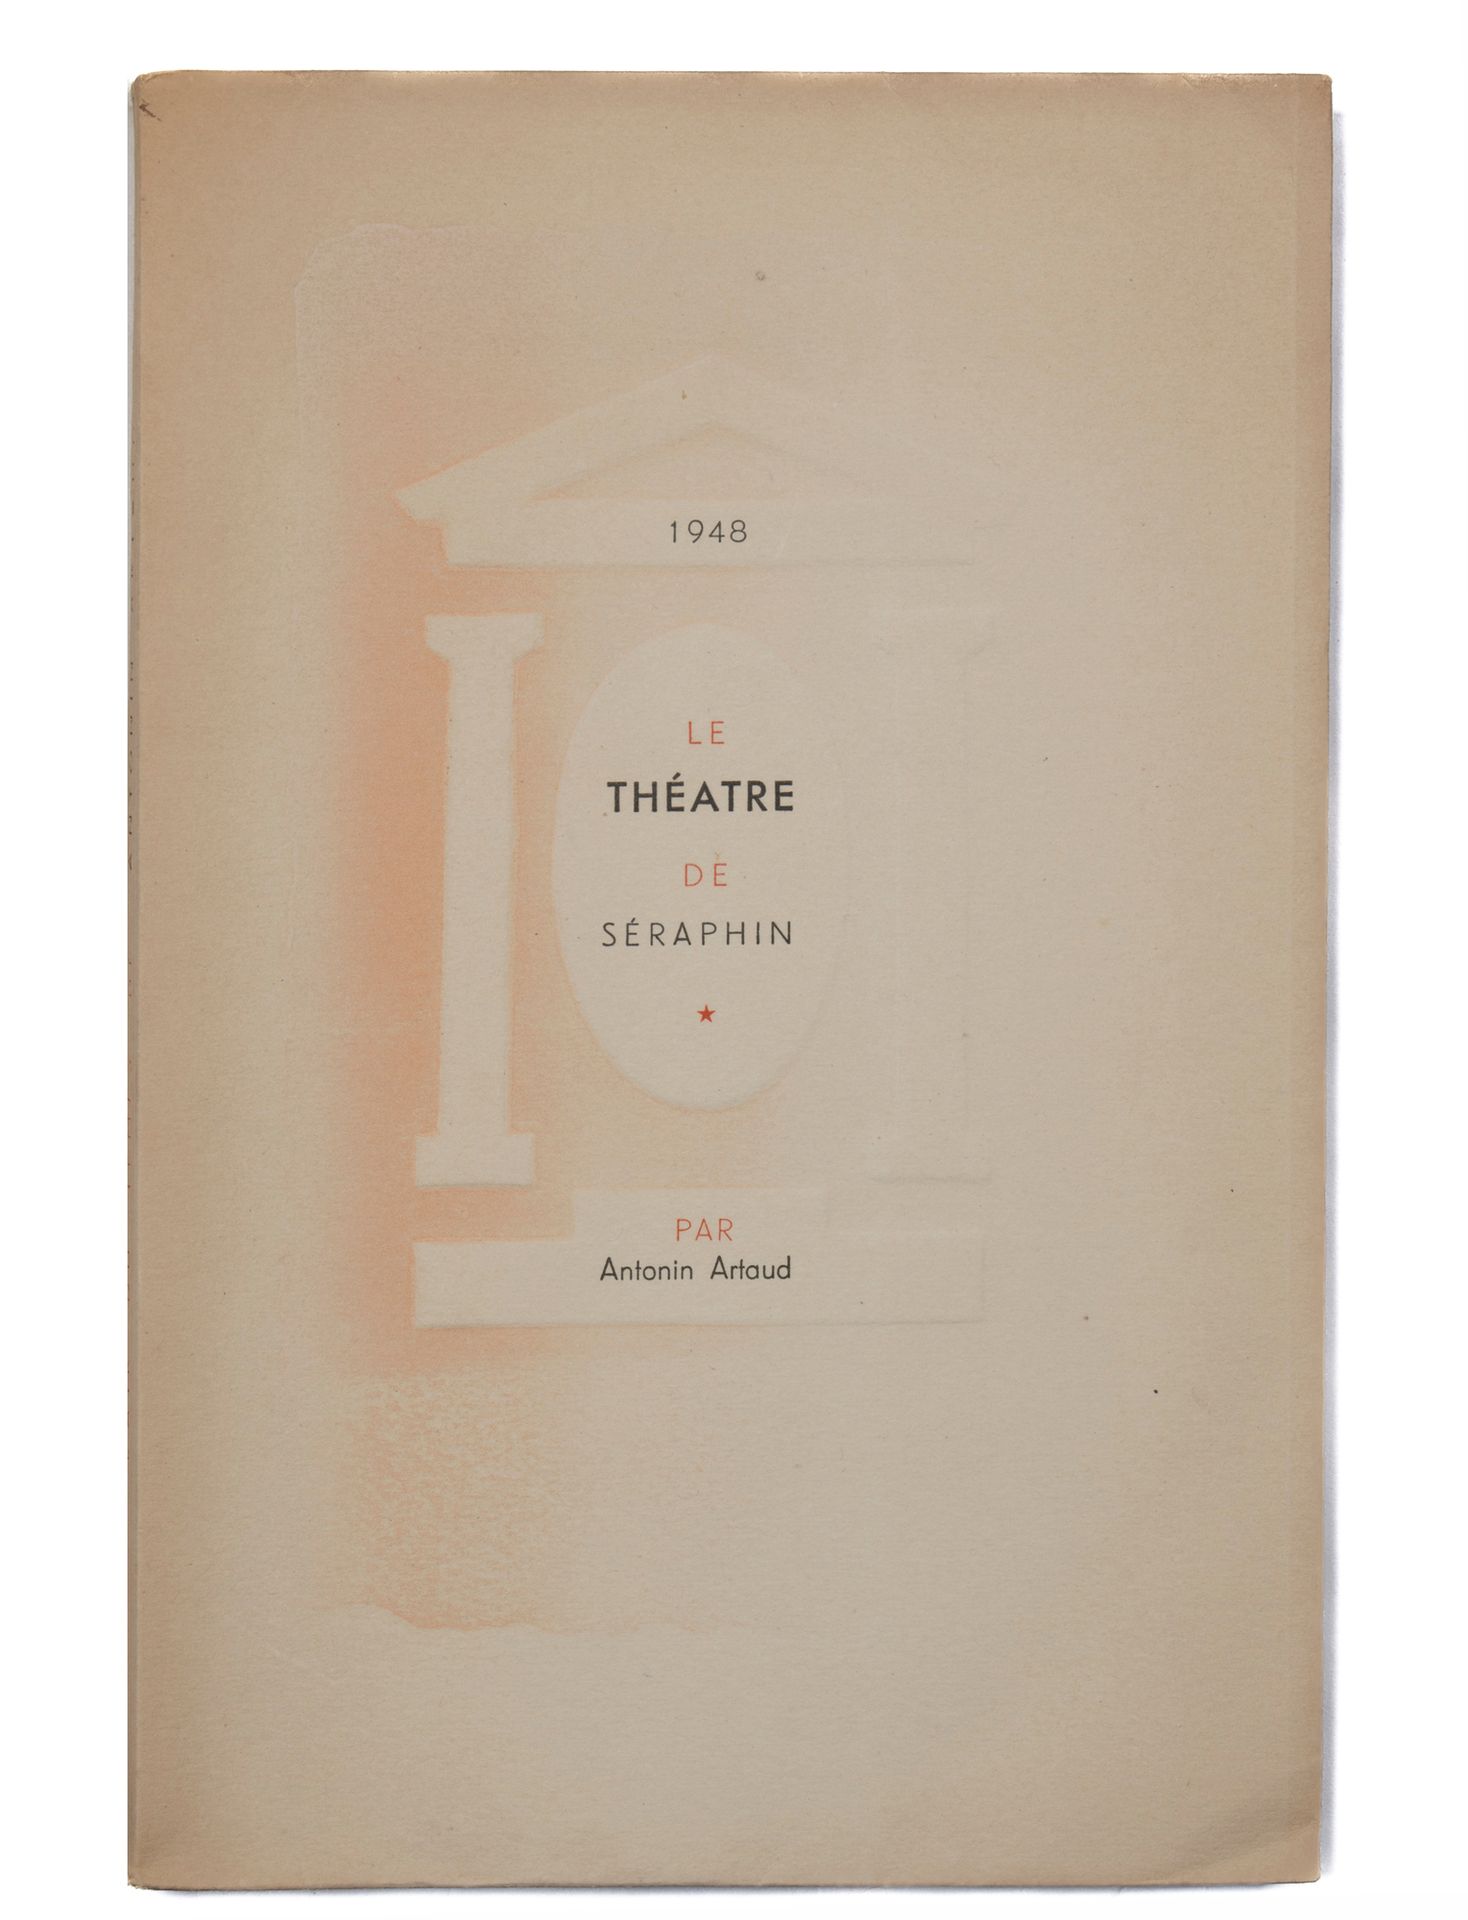 ARTAUD Antonin. 塞拉芬的剧院。1948年。小四开，平装本。
第一版。重印的30份中的一份（第7号）。
费迪埃医生的前书信。